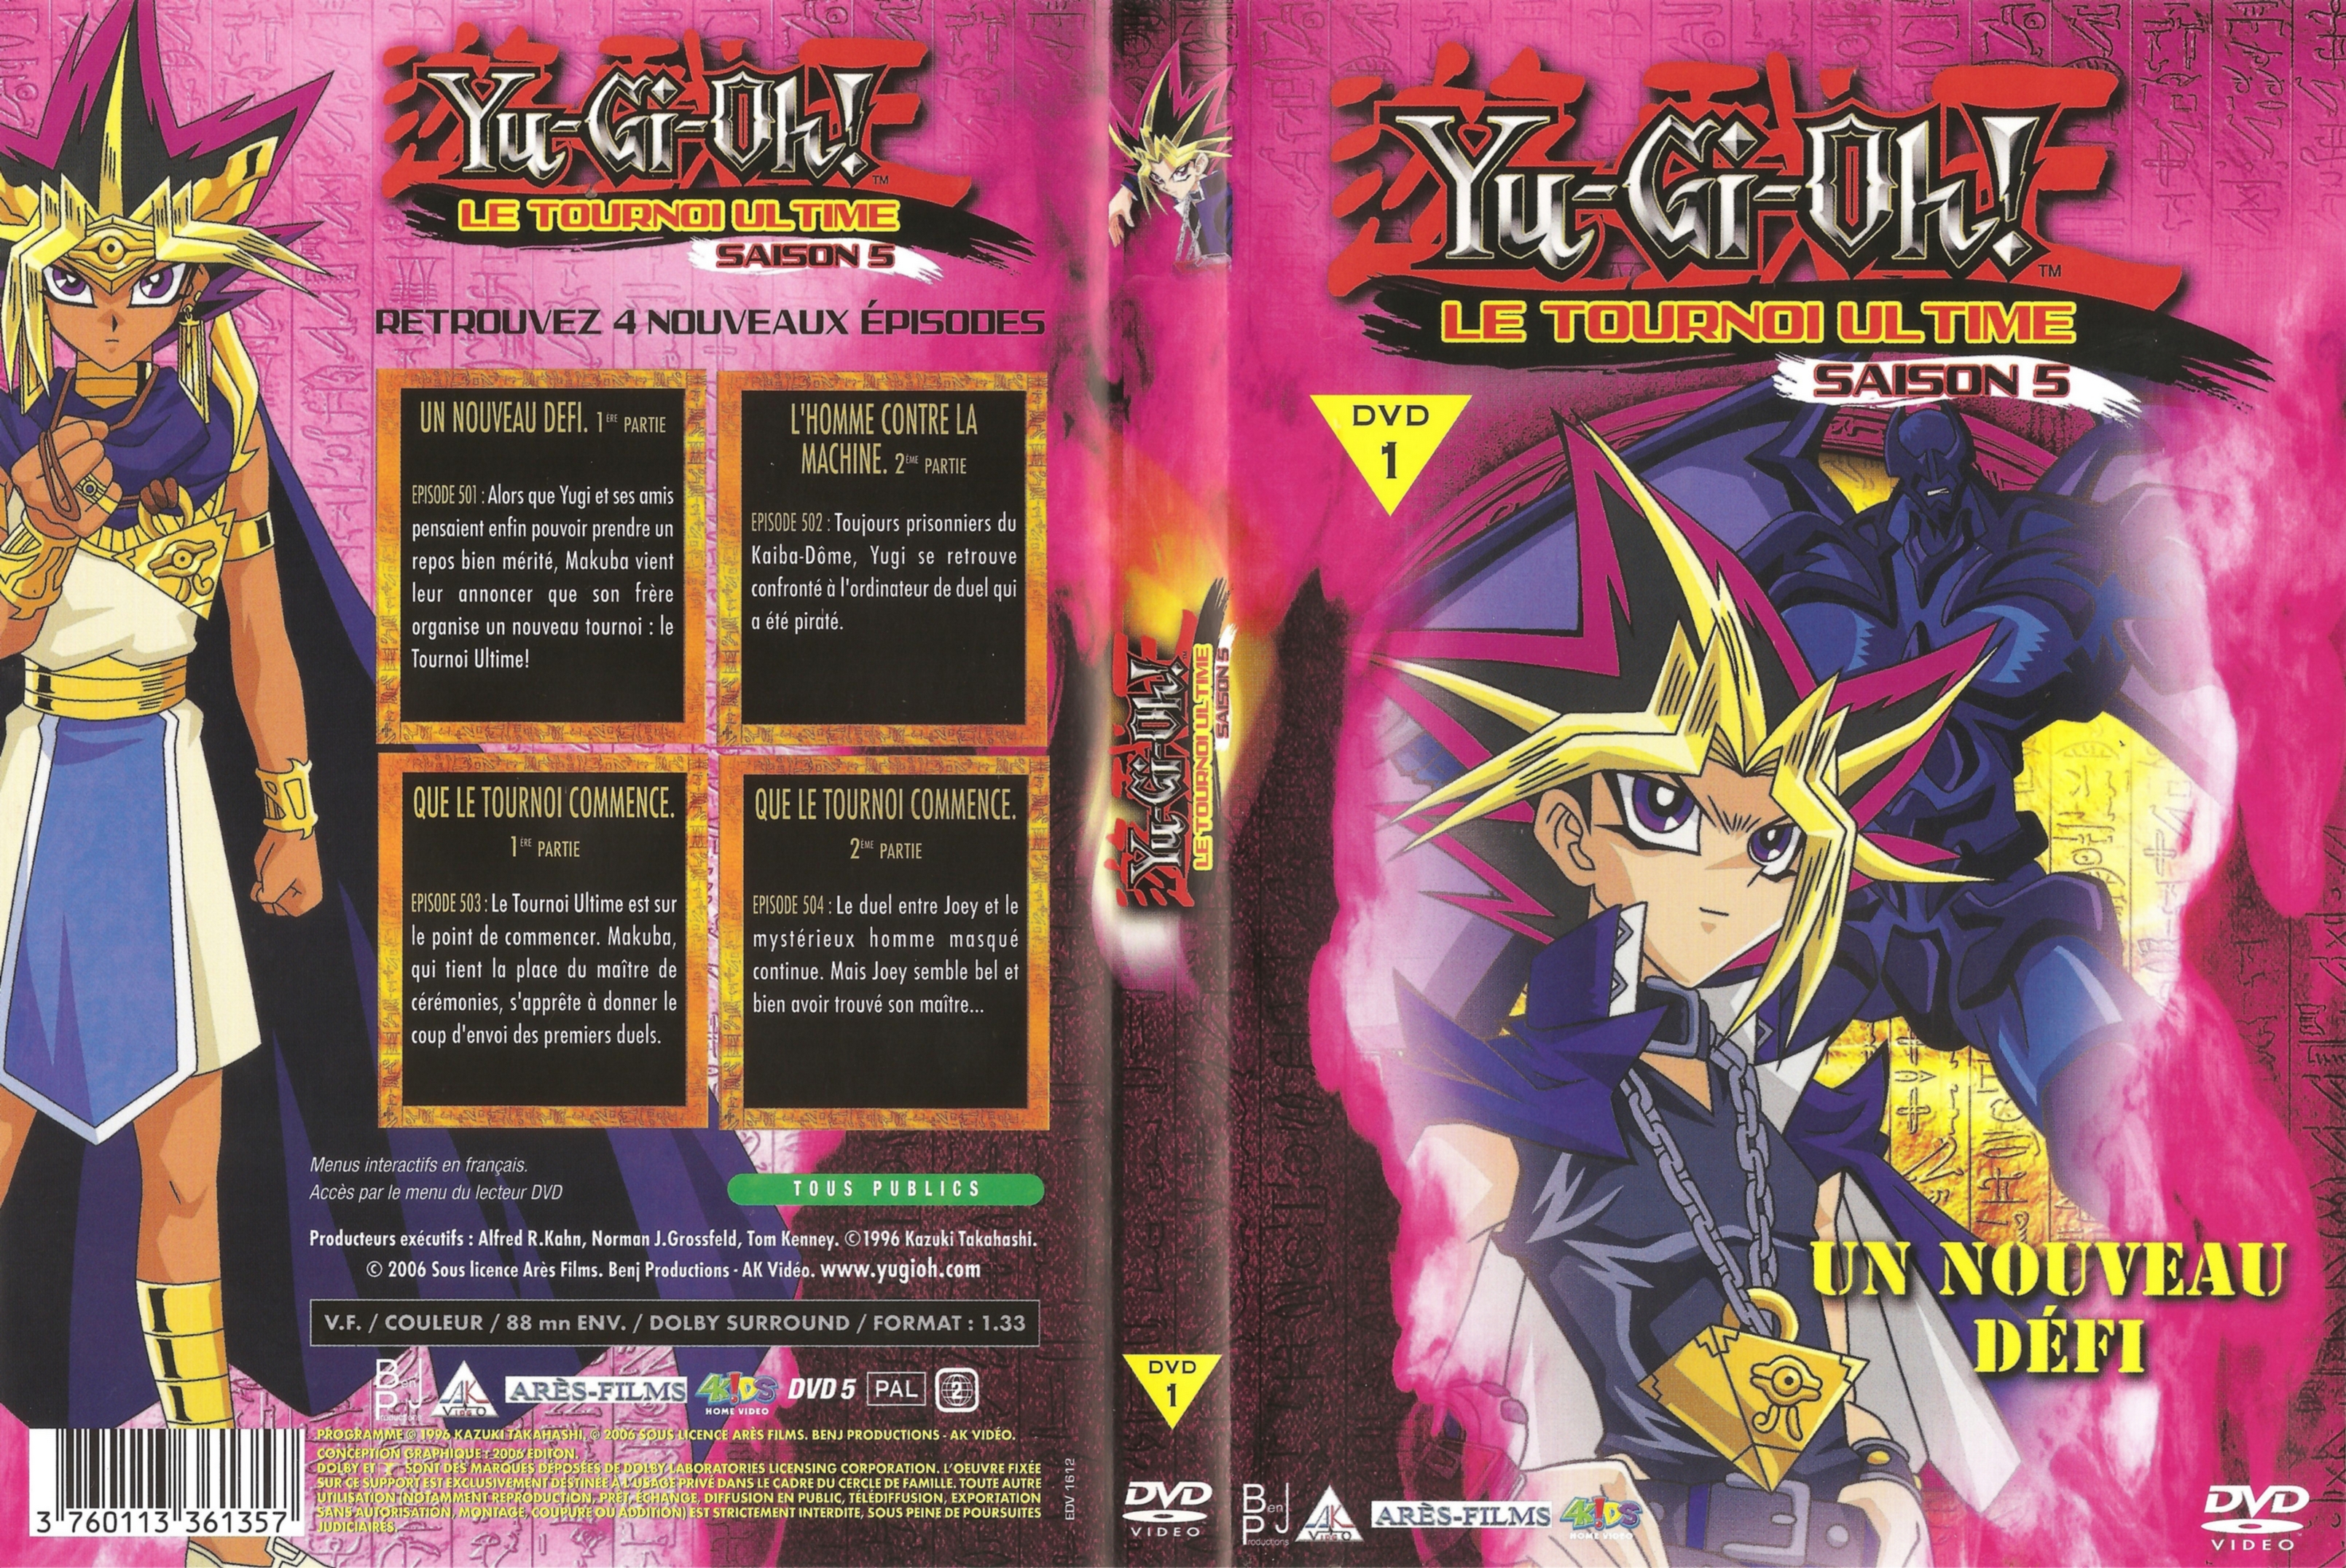 Jaquette DVD Yu-gi-oh! Saison 5 vol 1